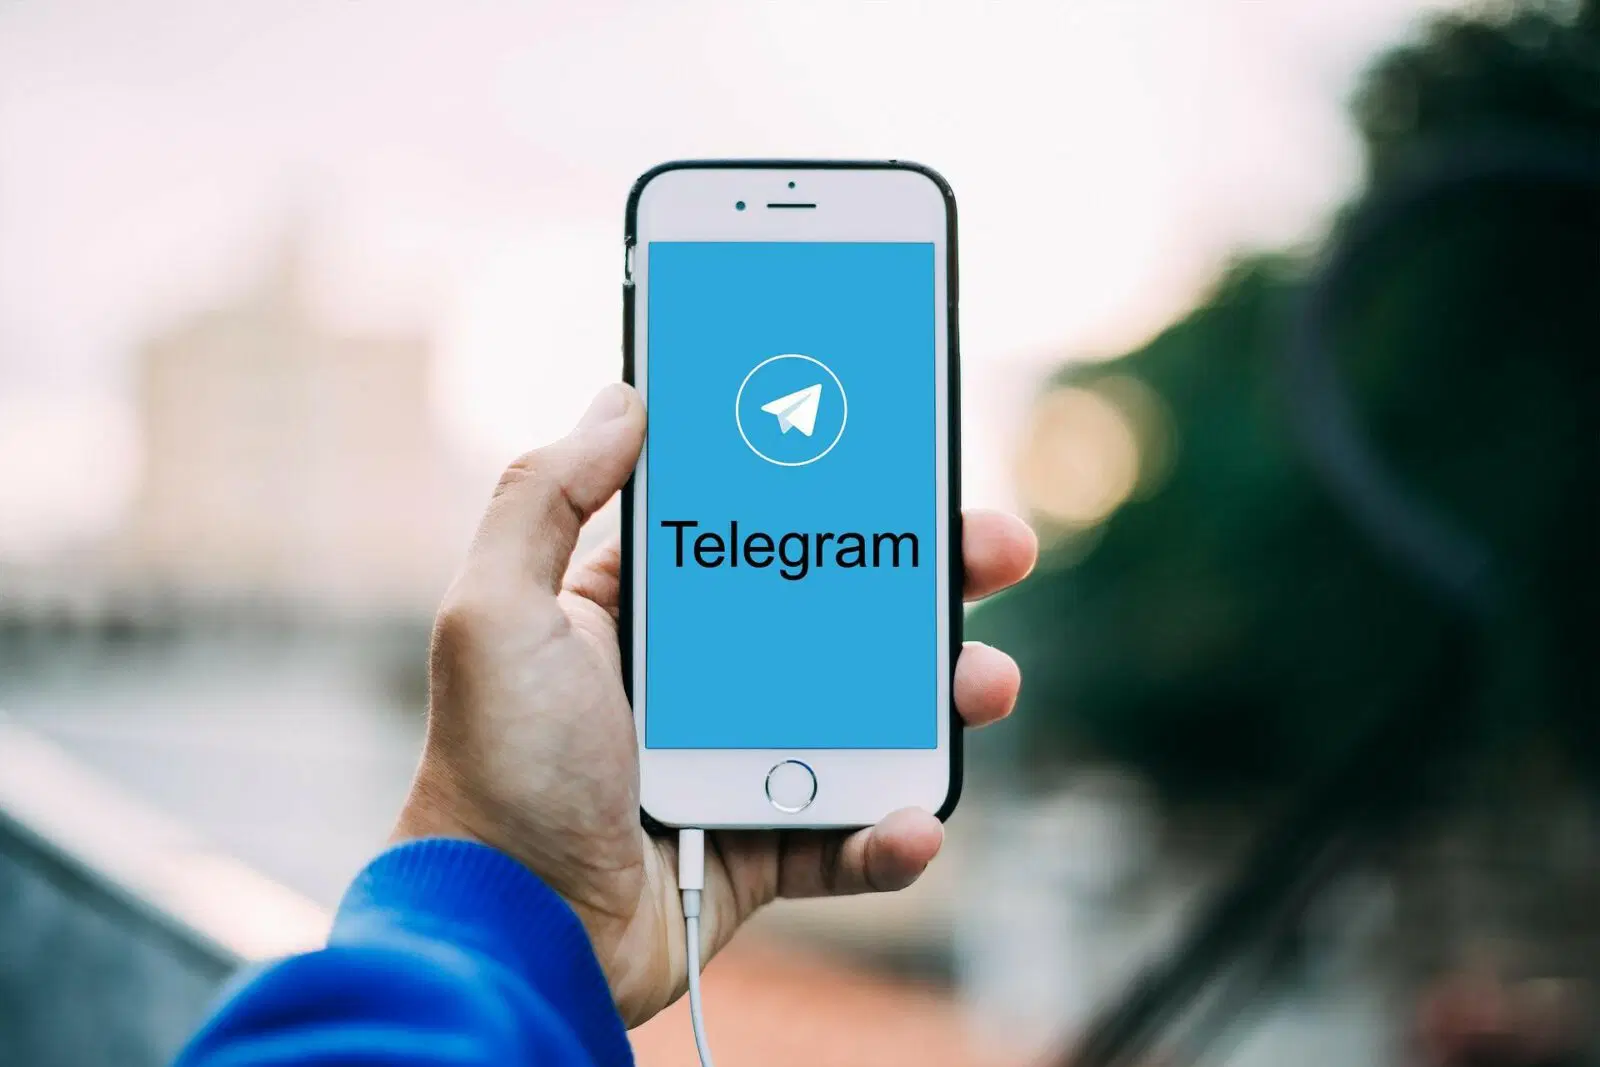 Unlock a telegram group on Iphone (IOS)